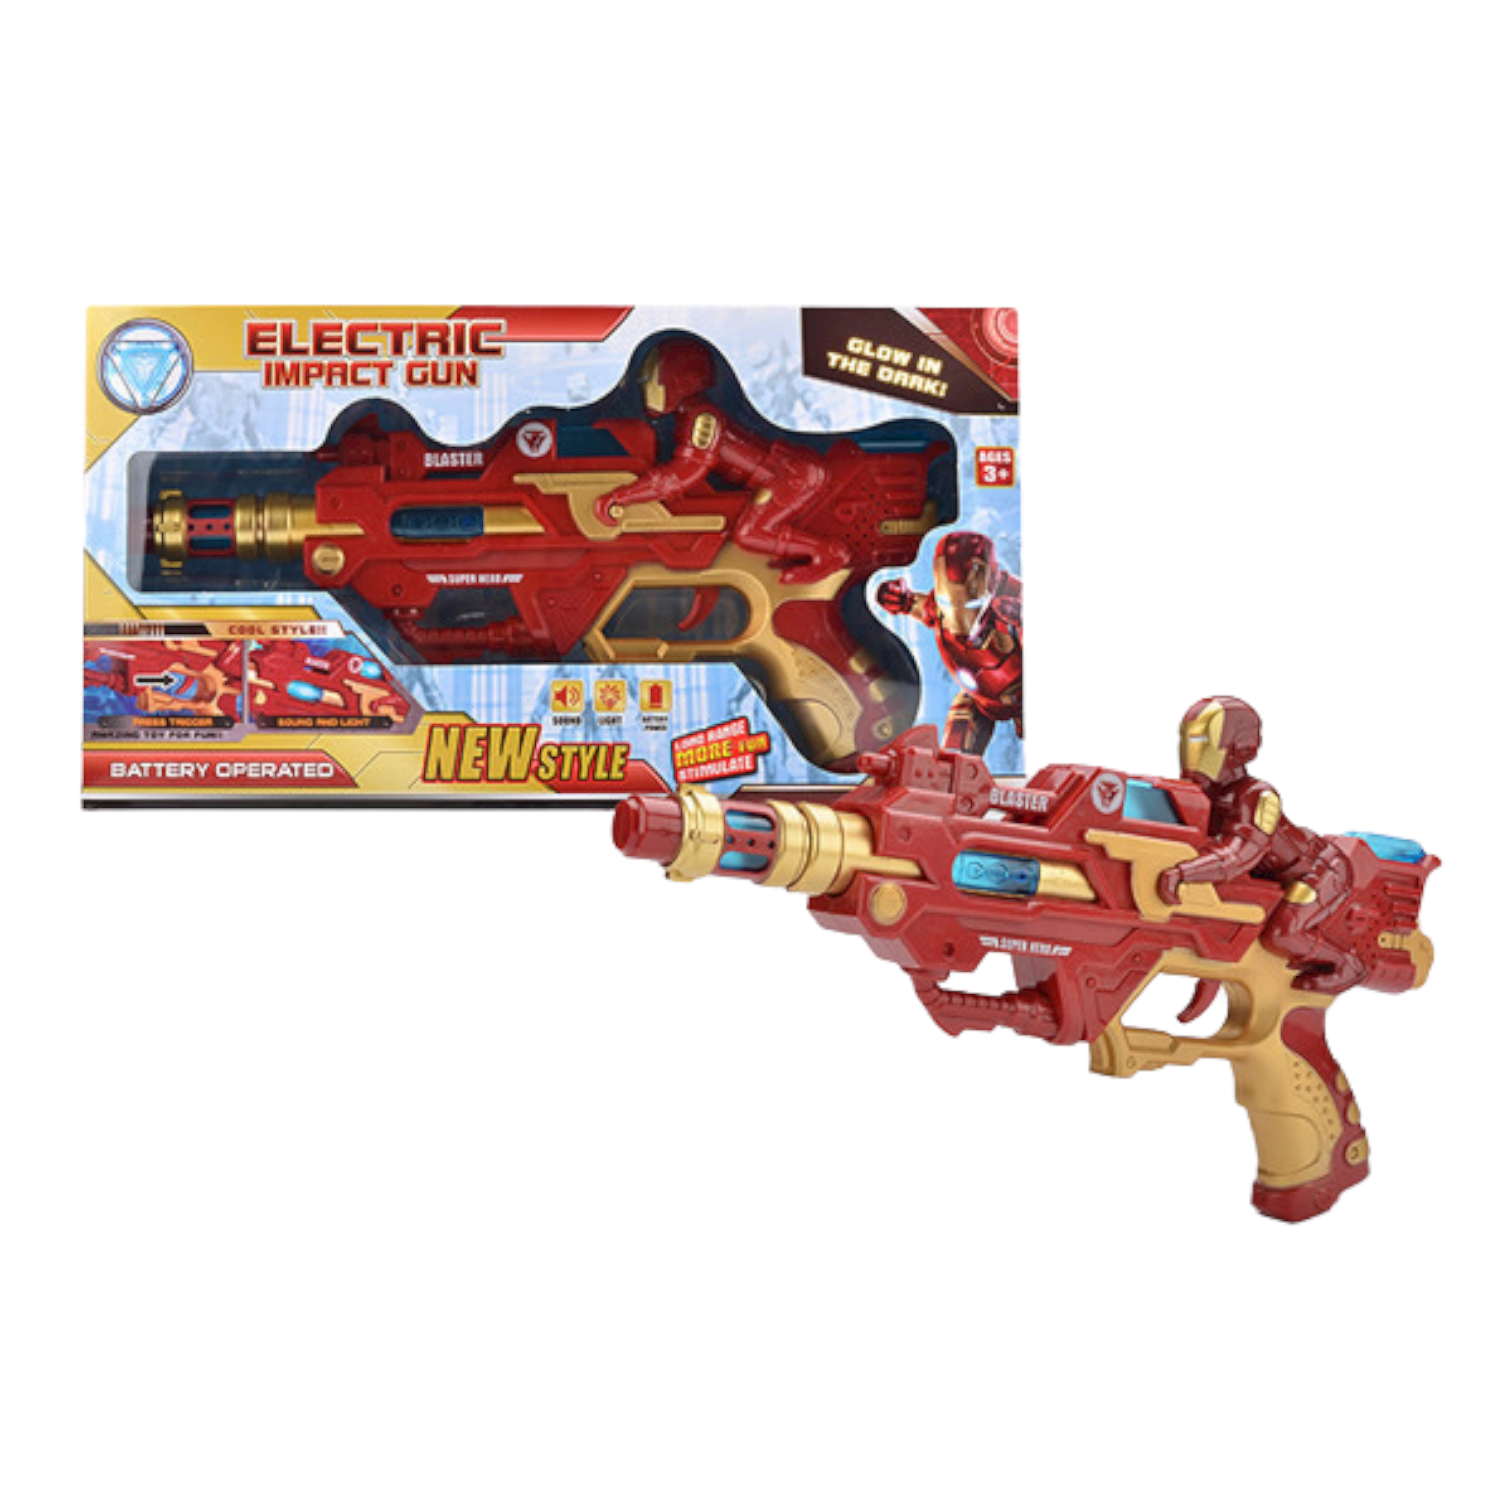 Electric Impact Toy Gun